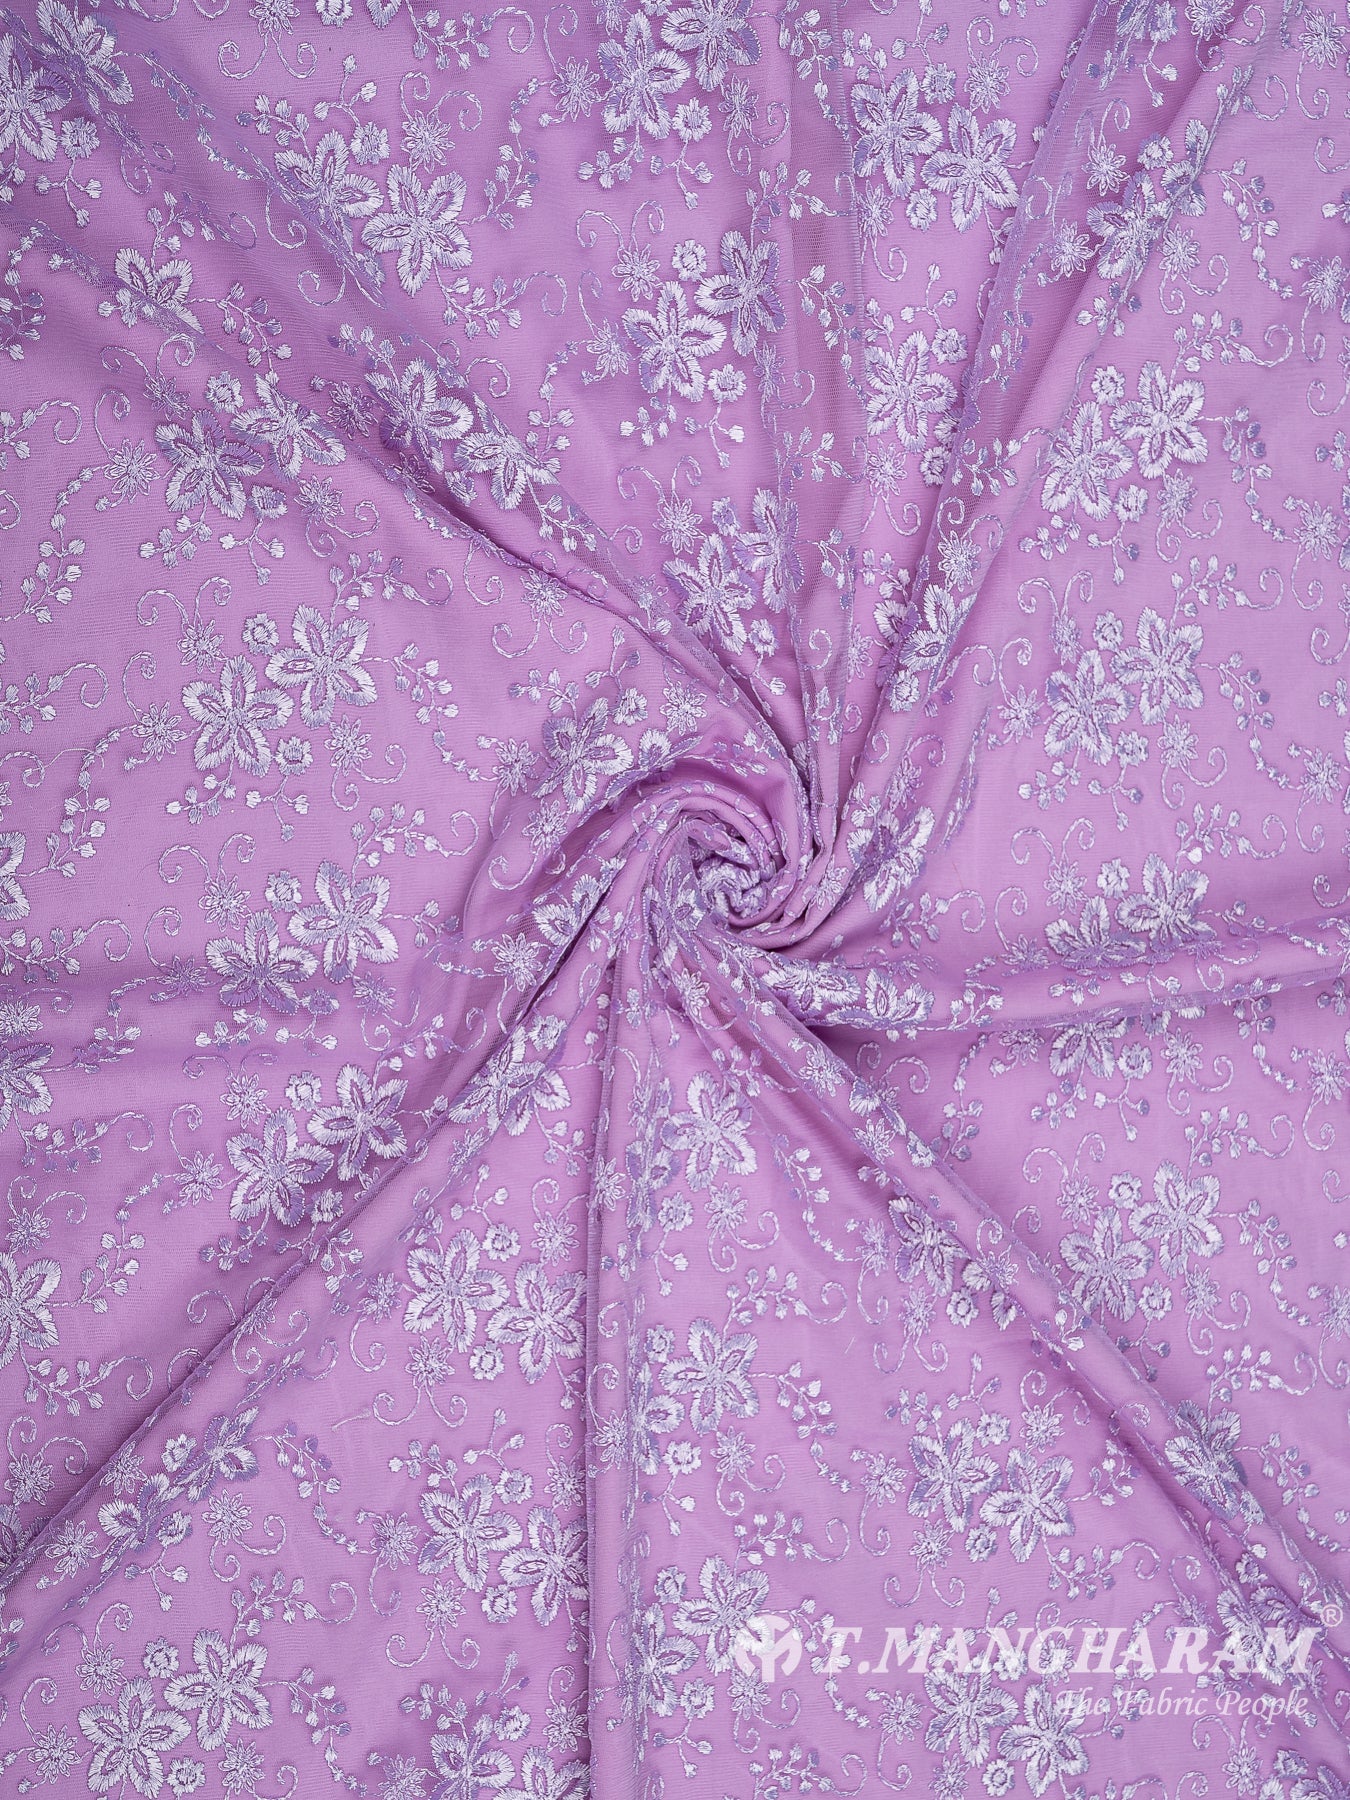 Violet Fancy Net Fabric - EB5808 view-1